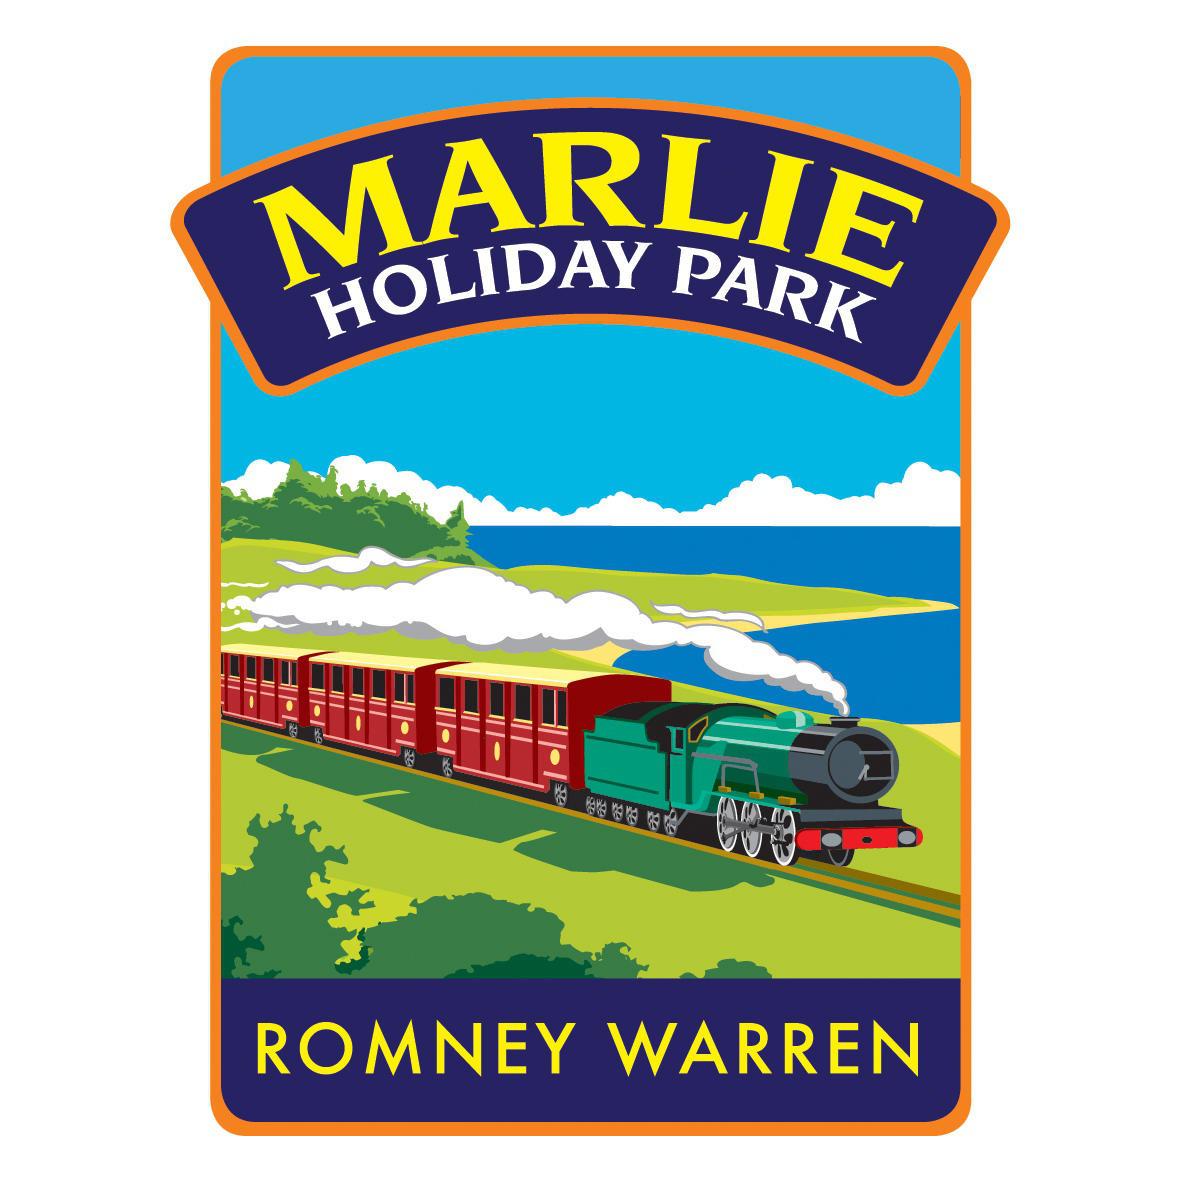 Marlie Holiday Park Logo